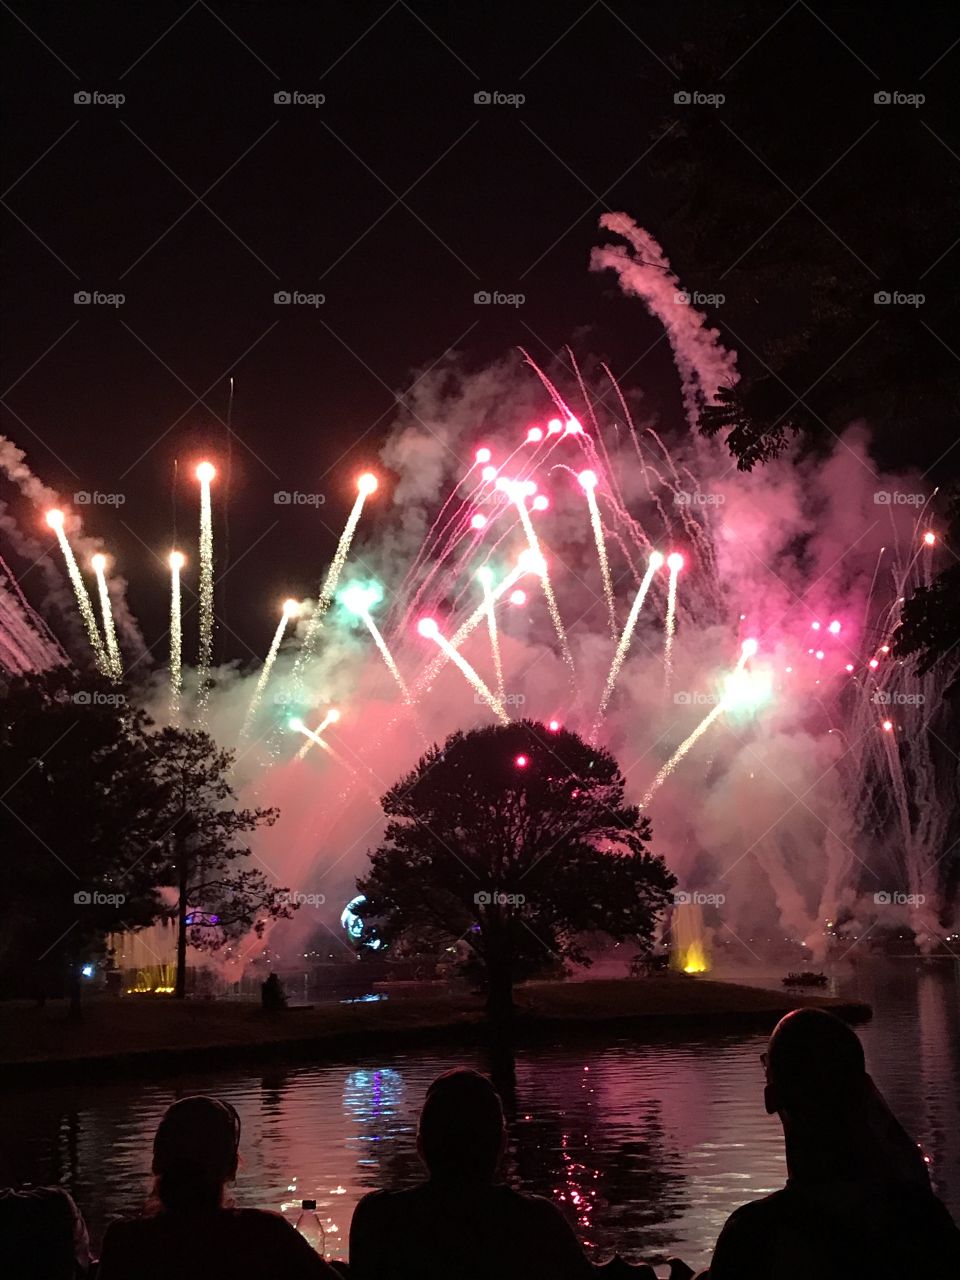 Disney fireworks at Epcot